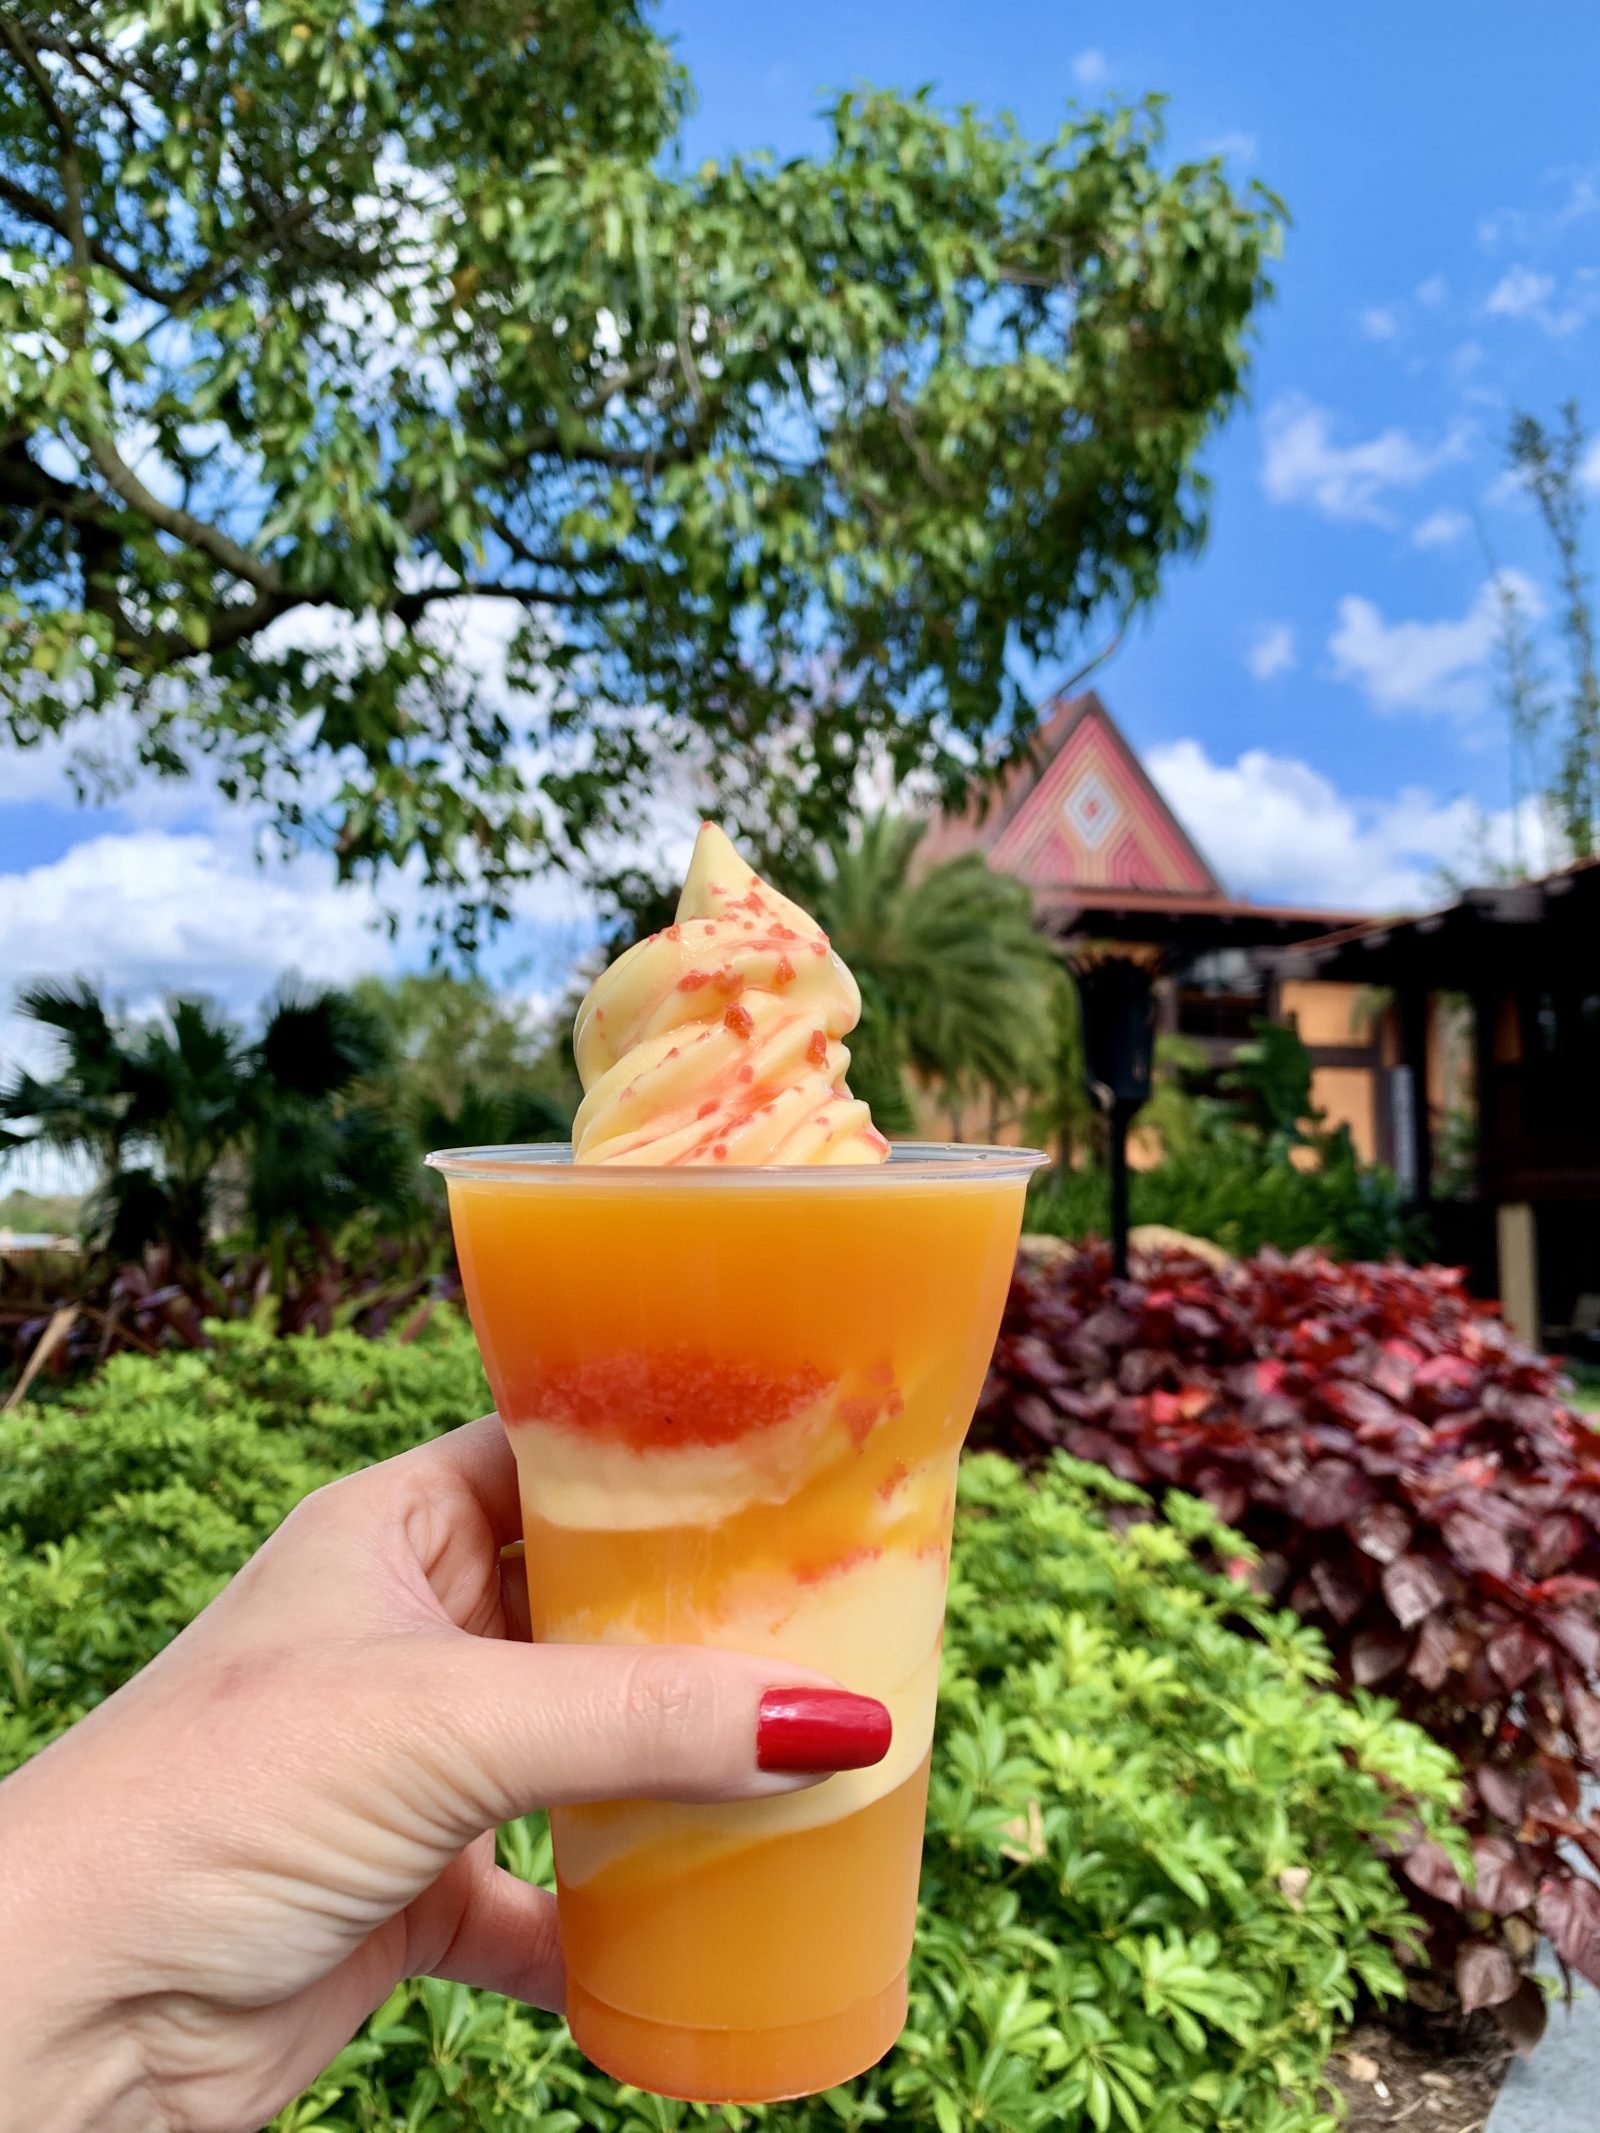 "I Lava You" Dole Whip Float from Disney’s Polynesian Resort